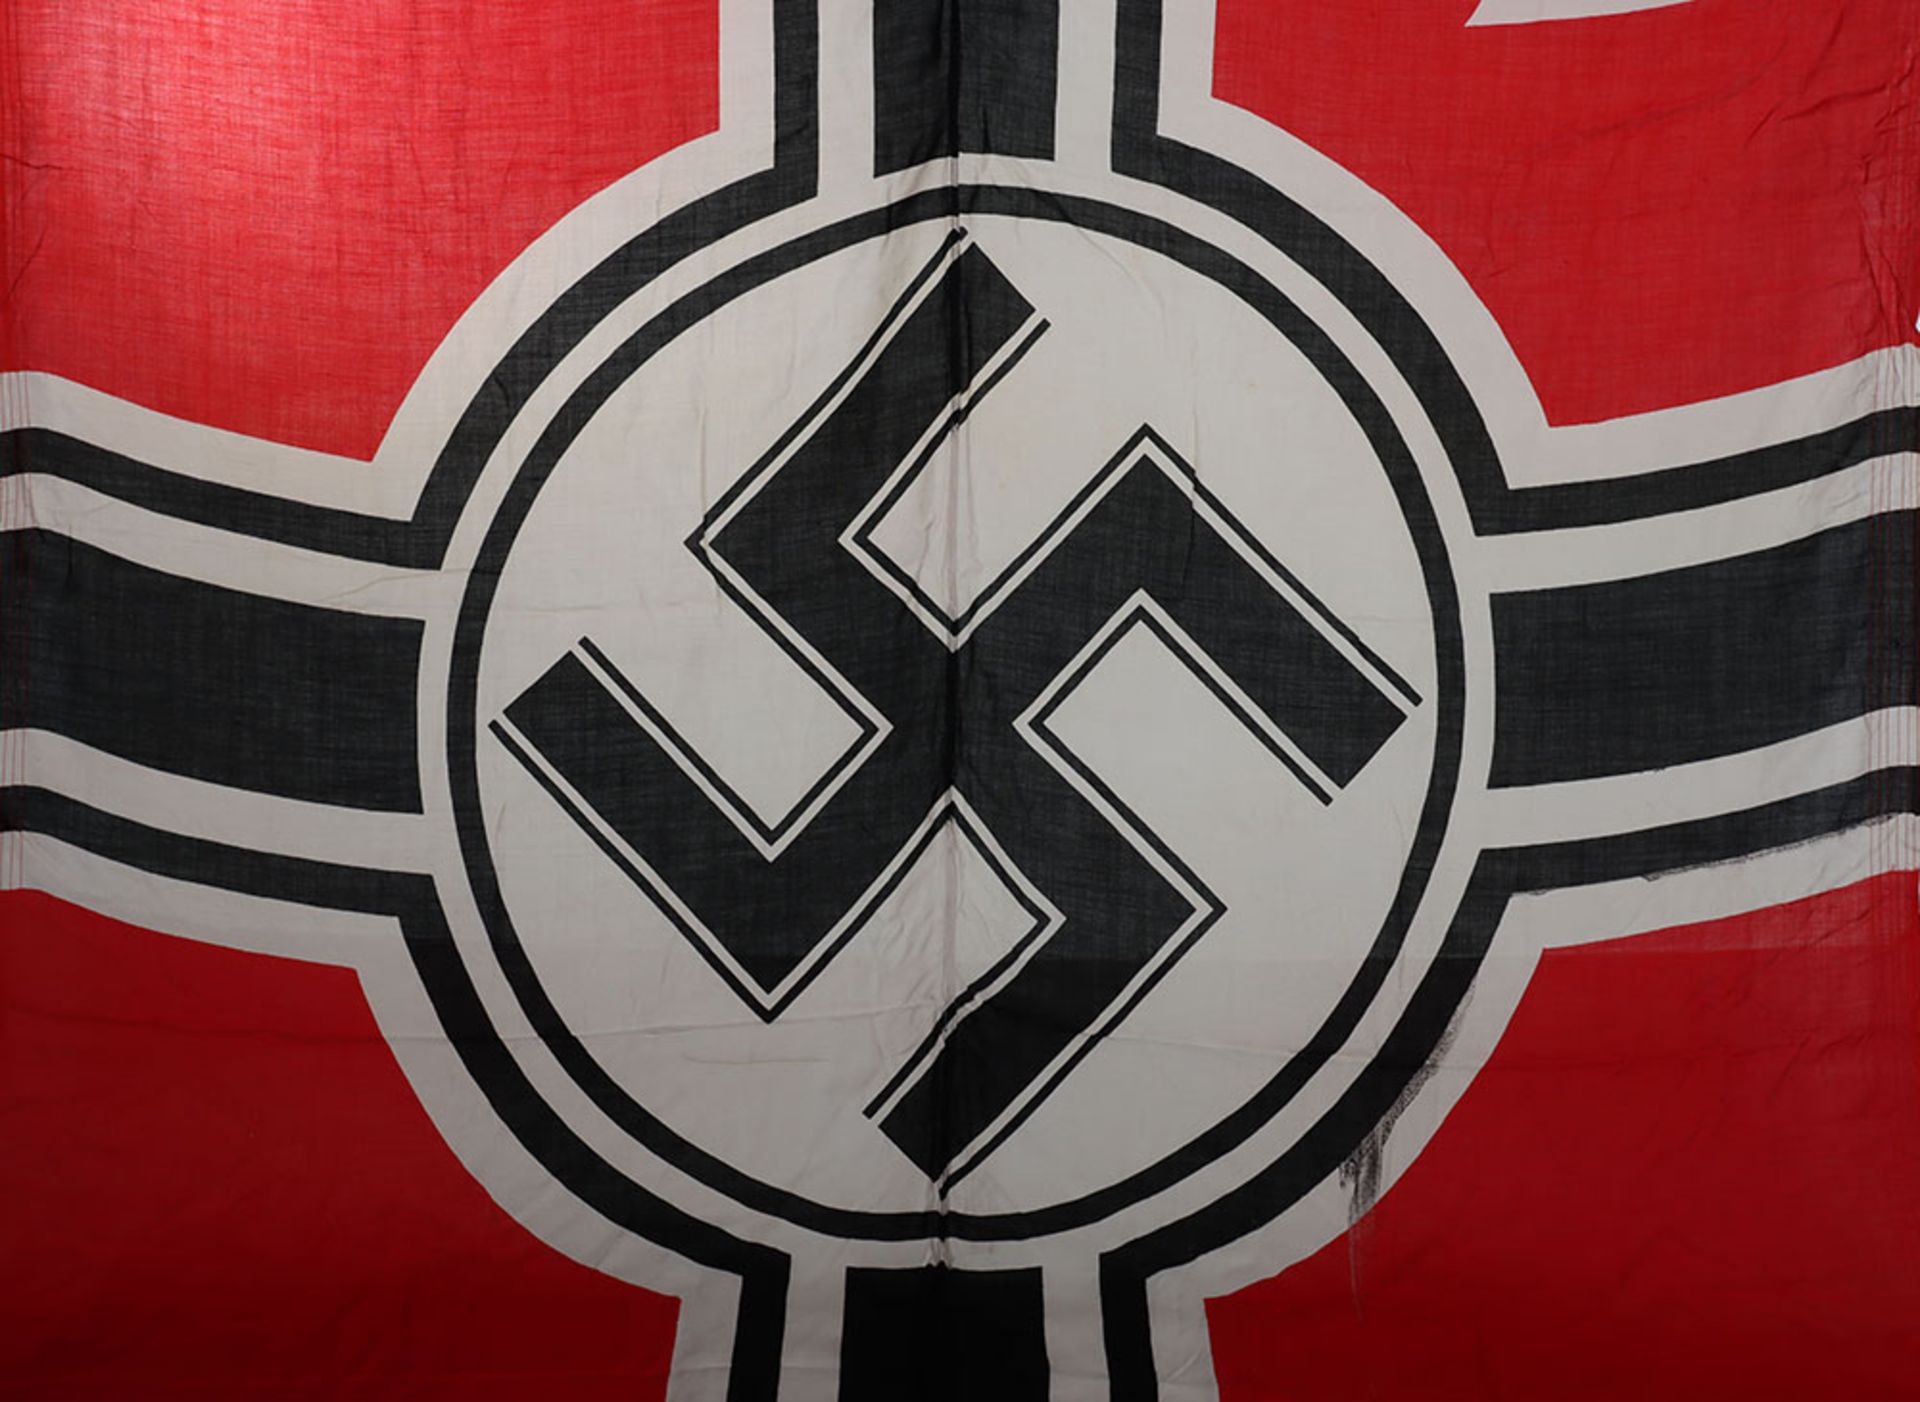 Large WW2 German Battle Flag (Reichskriegsflagge) - Image 2 of 11